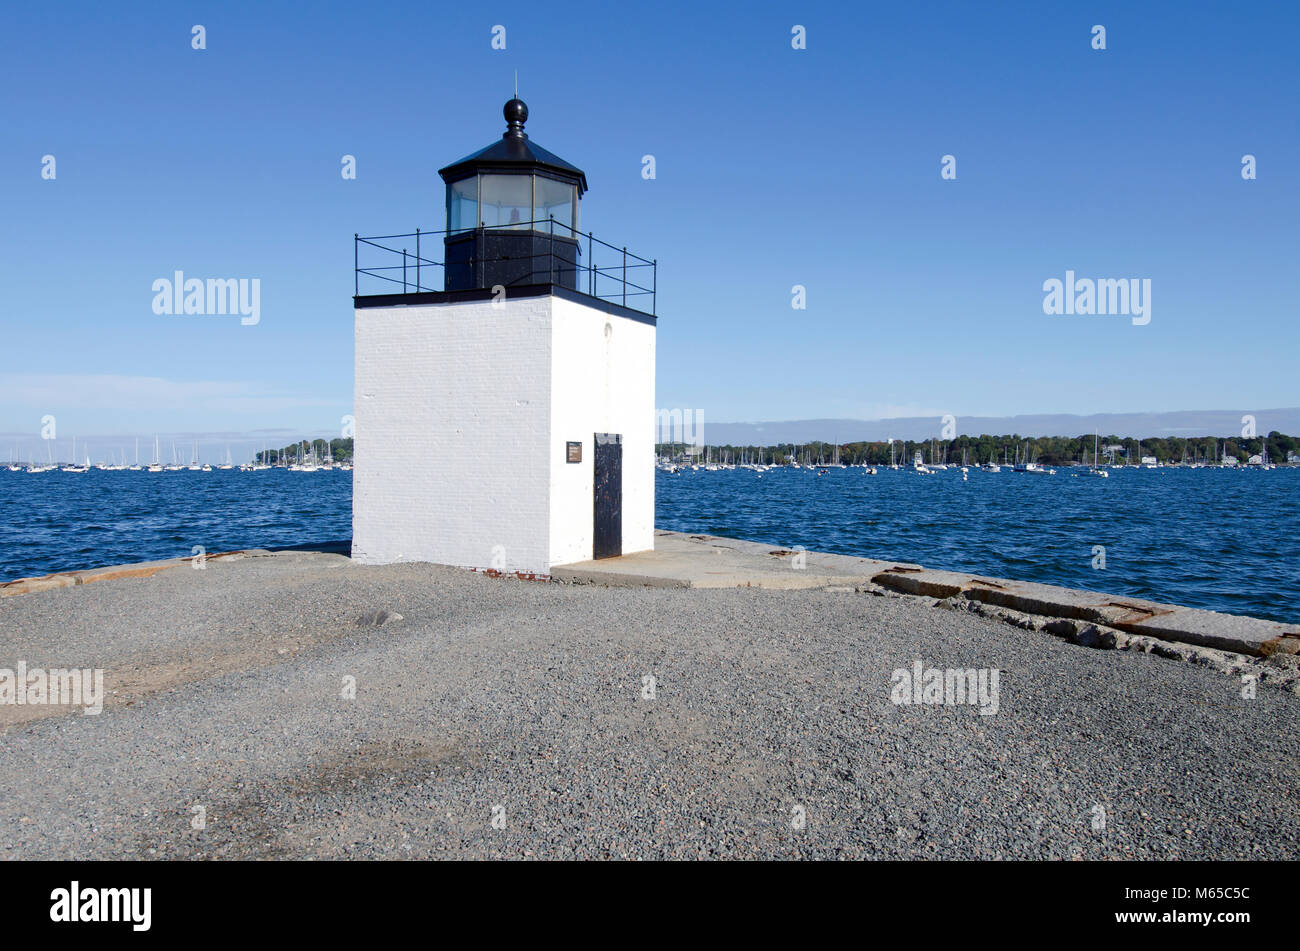 Derby Wharf Light Station or lighthouse on Salem, MA Harbor Stock Photo